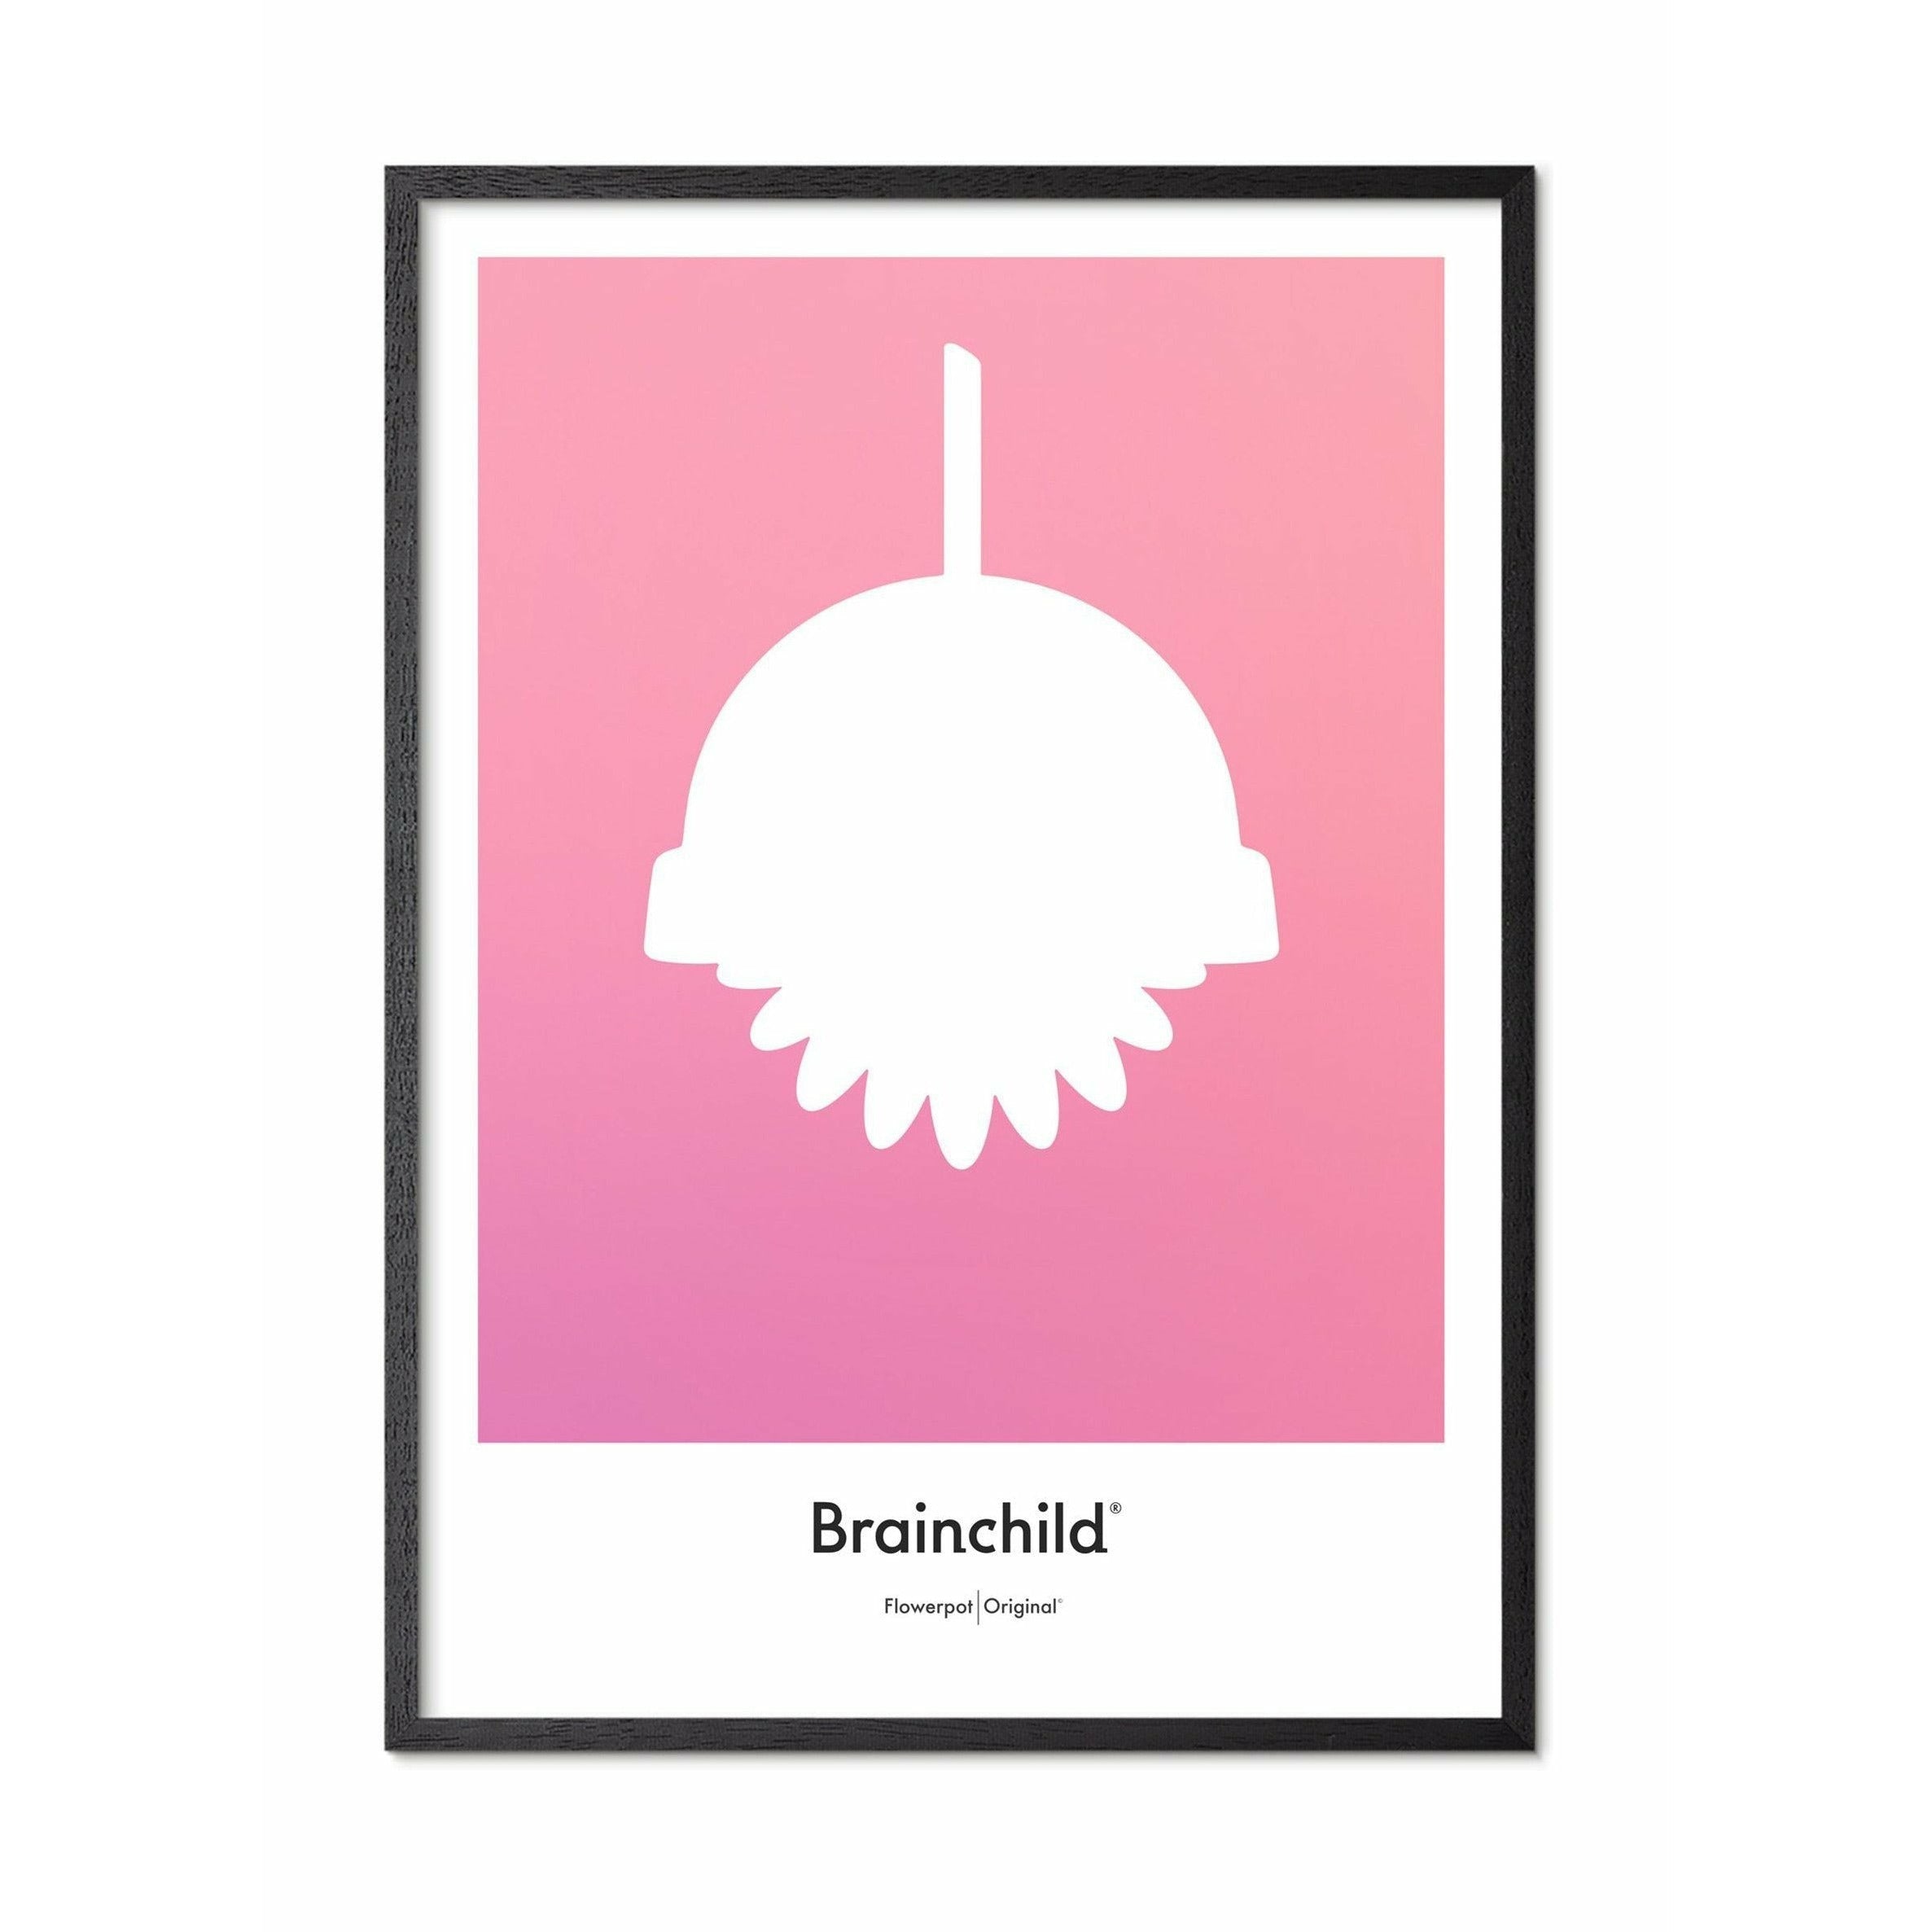 Brainchild Blumentopf Design Icon Poster, Rahmen aus schwarz lackiertem Holz 30x40 Cm, rosa